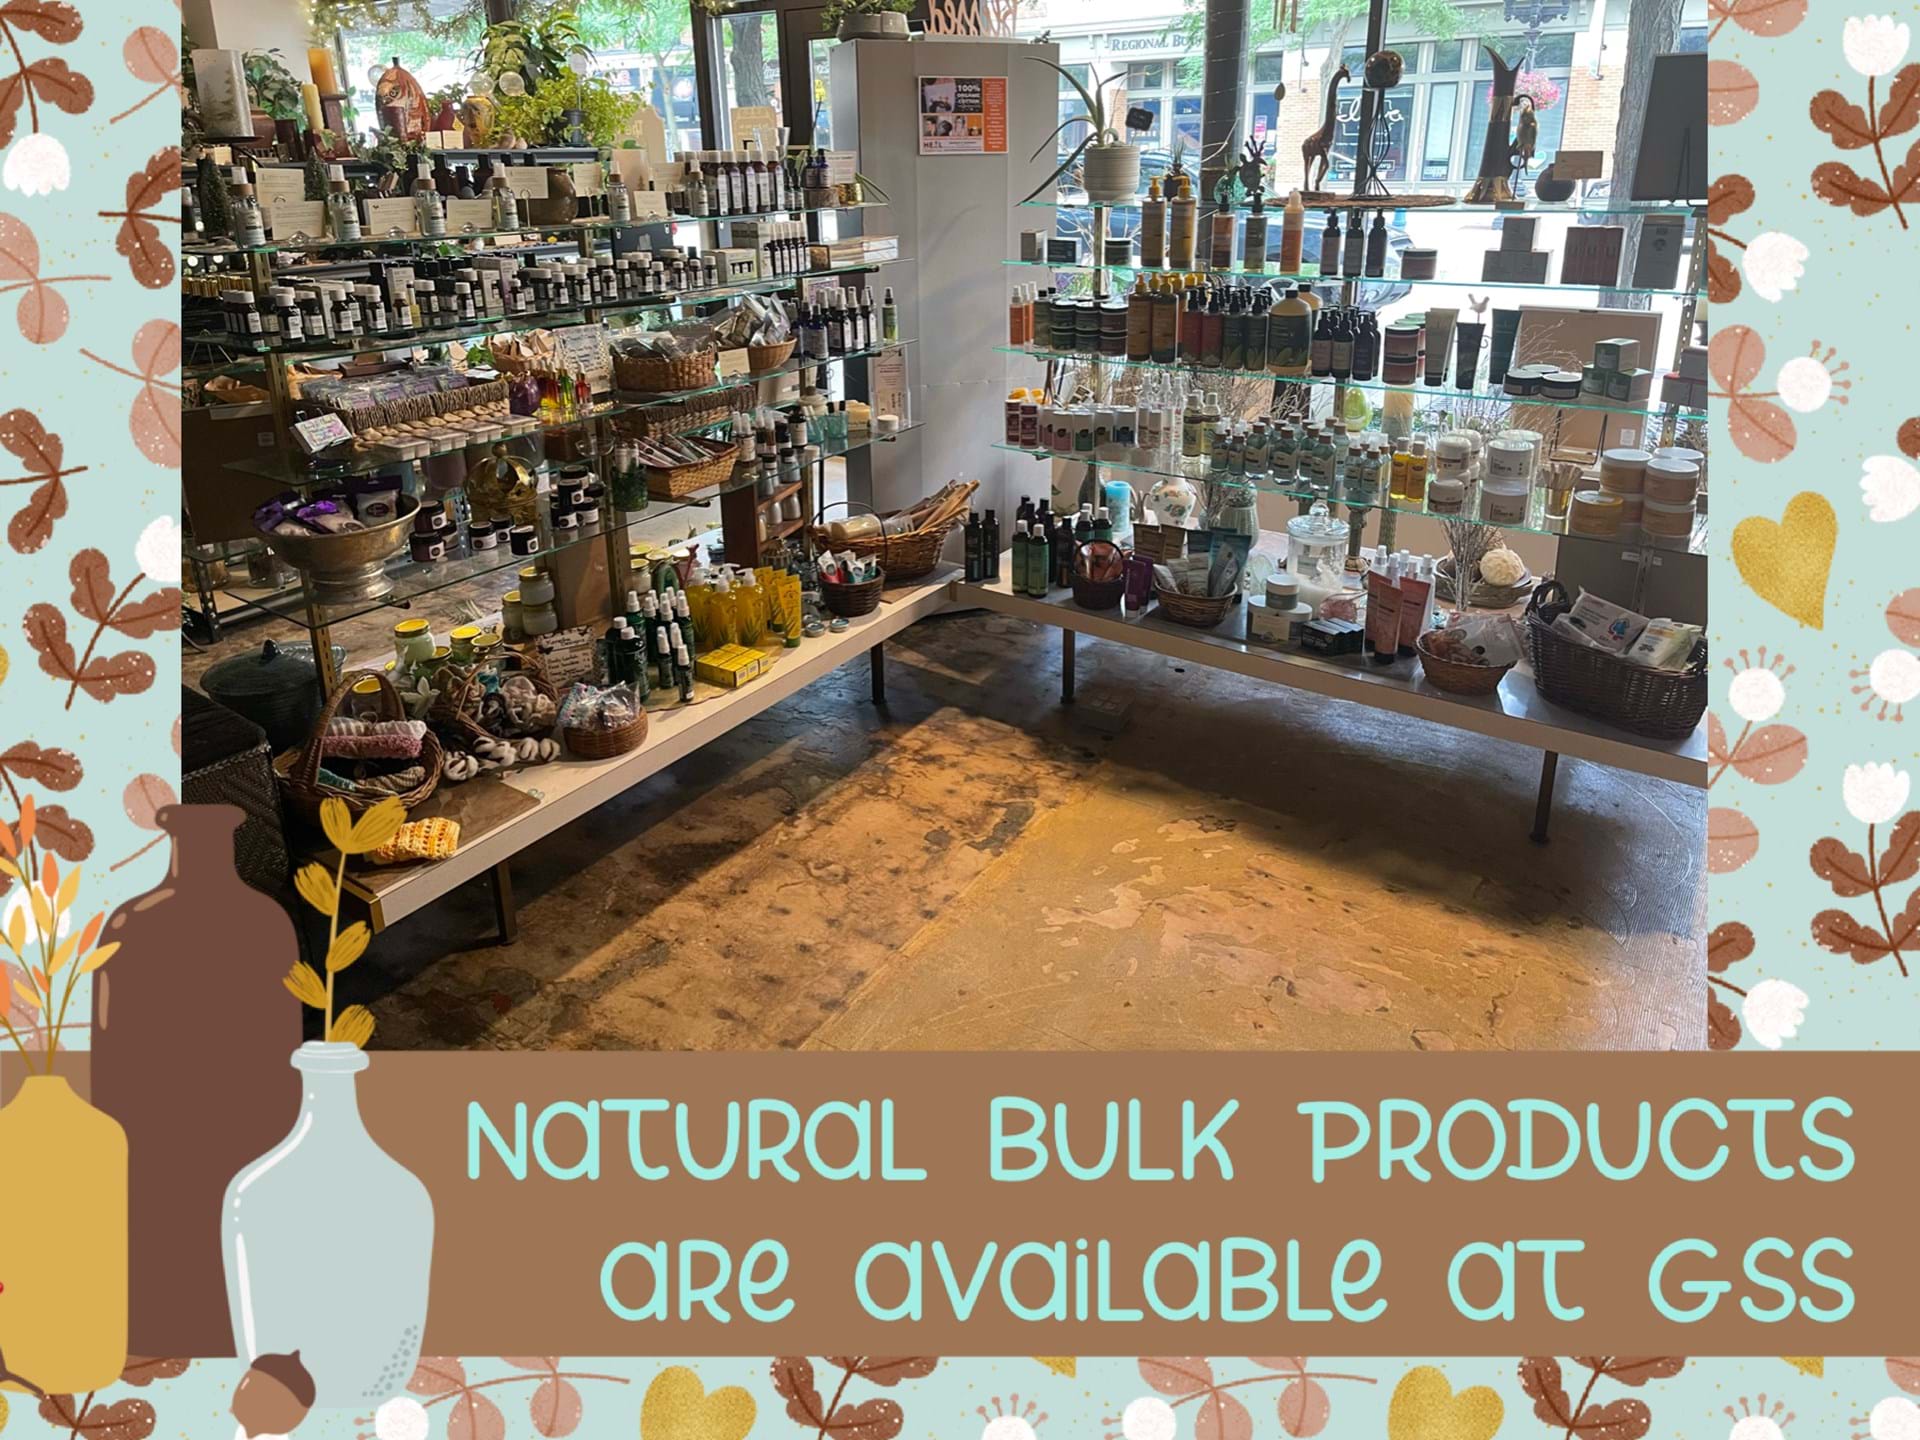 We sell bulk herbs, teas, etc. responsibly sourced